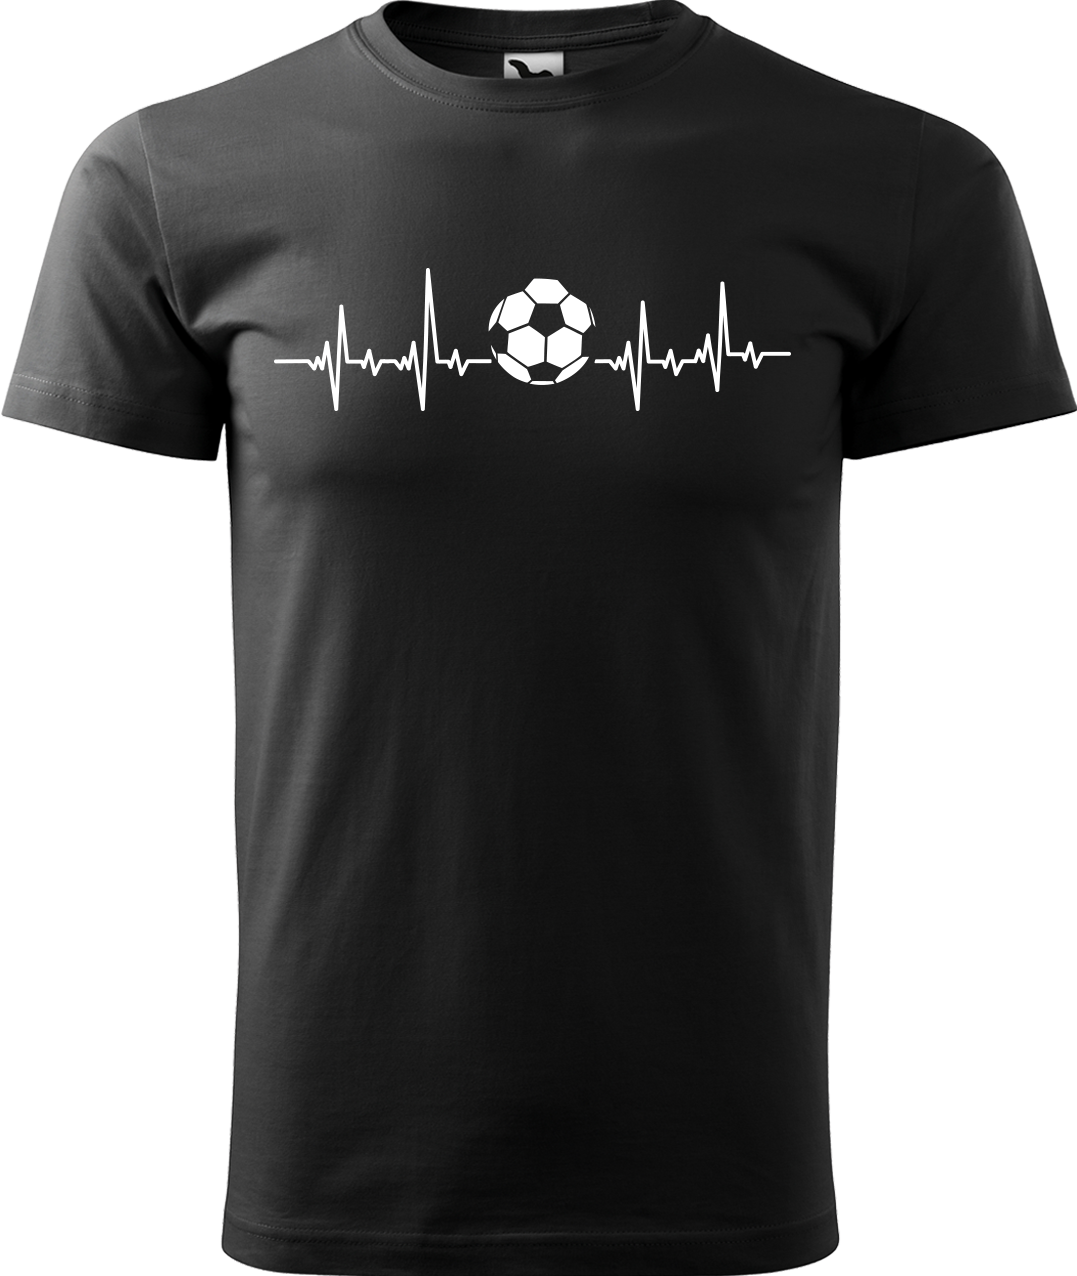 Tričko pro fotbalistu - Fotbalistův kardiogram Velikost: L, Barva: Černá (01)